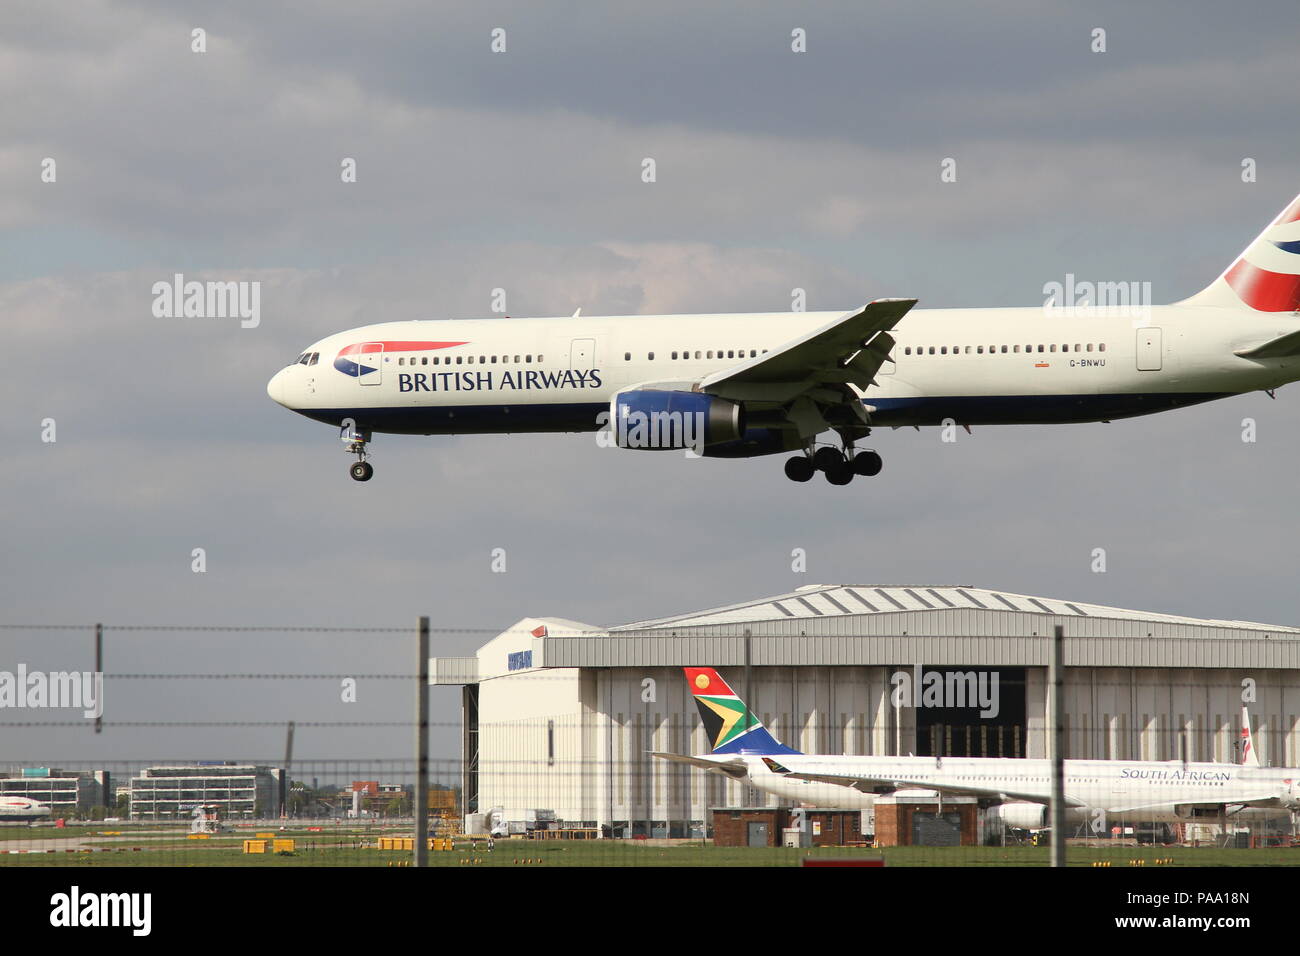 British Airways passenger jet landing at Heathrow airport, UK. Photo credit Russell Moore. Stock Photo